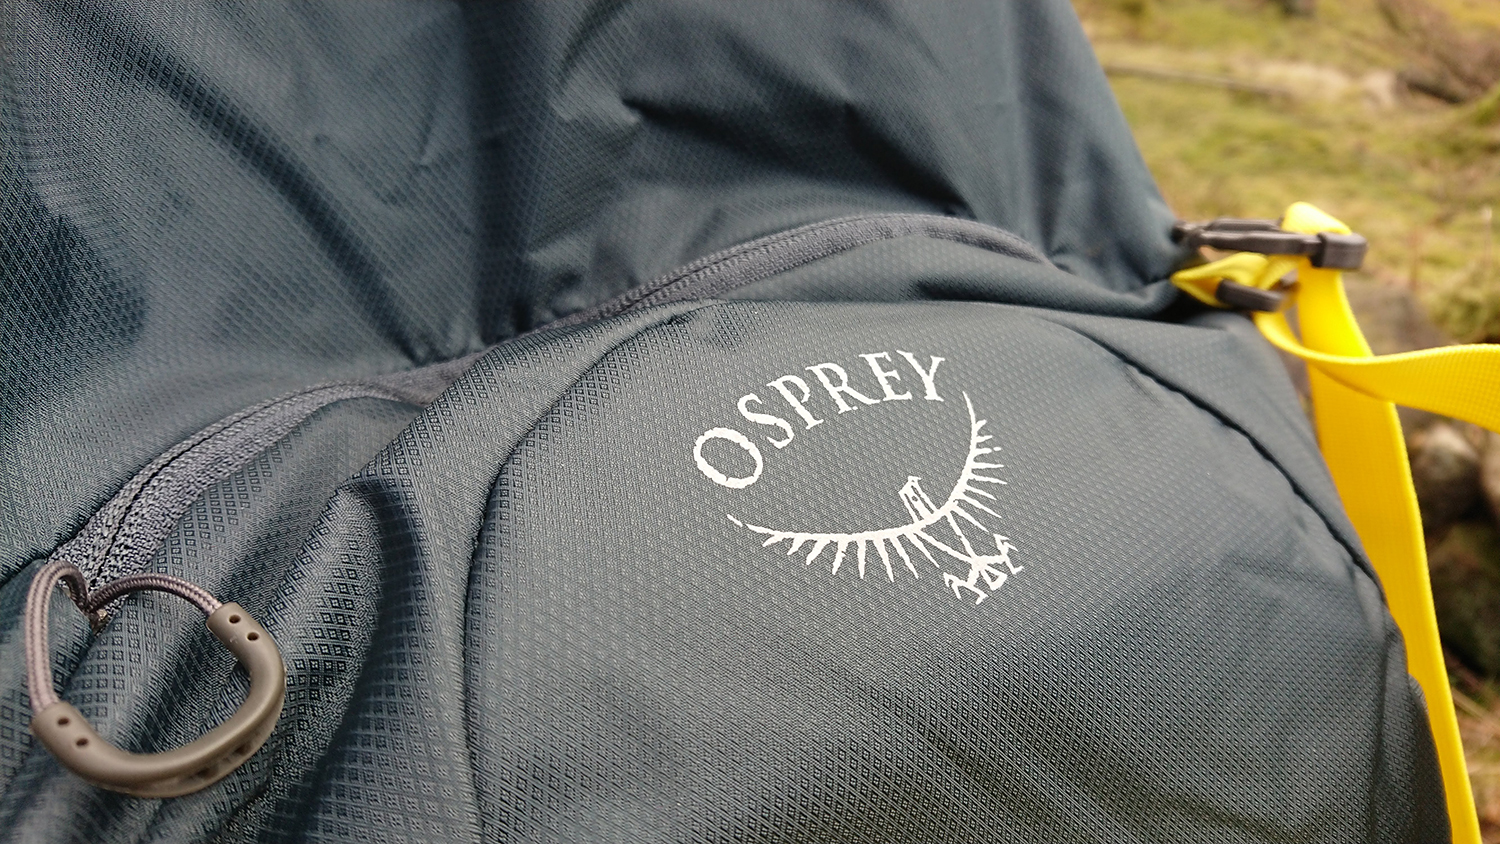 Osprey Hikelite 26 Backpack